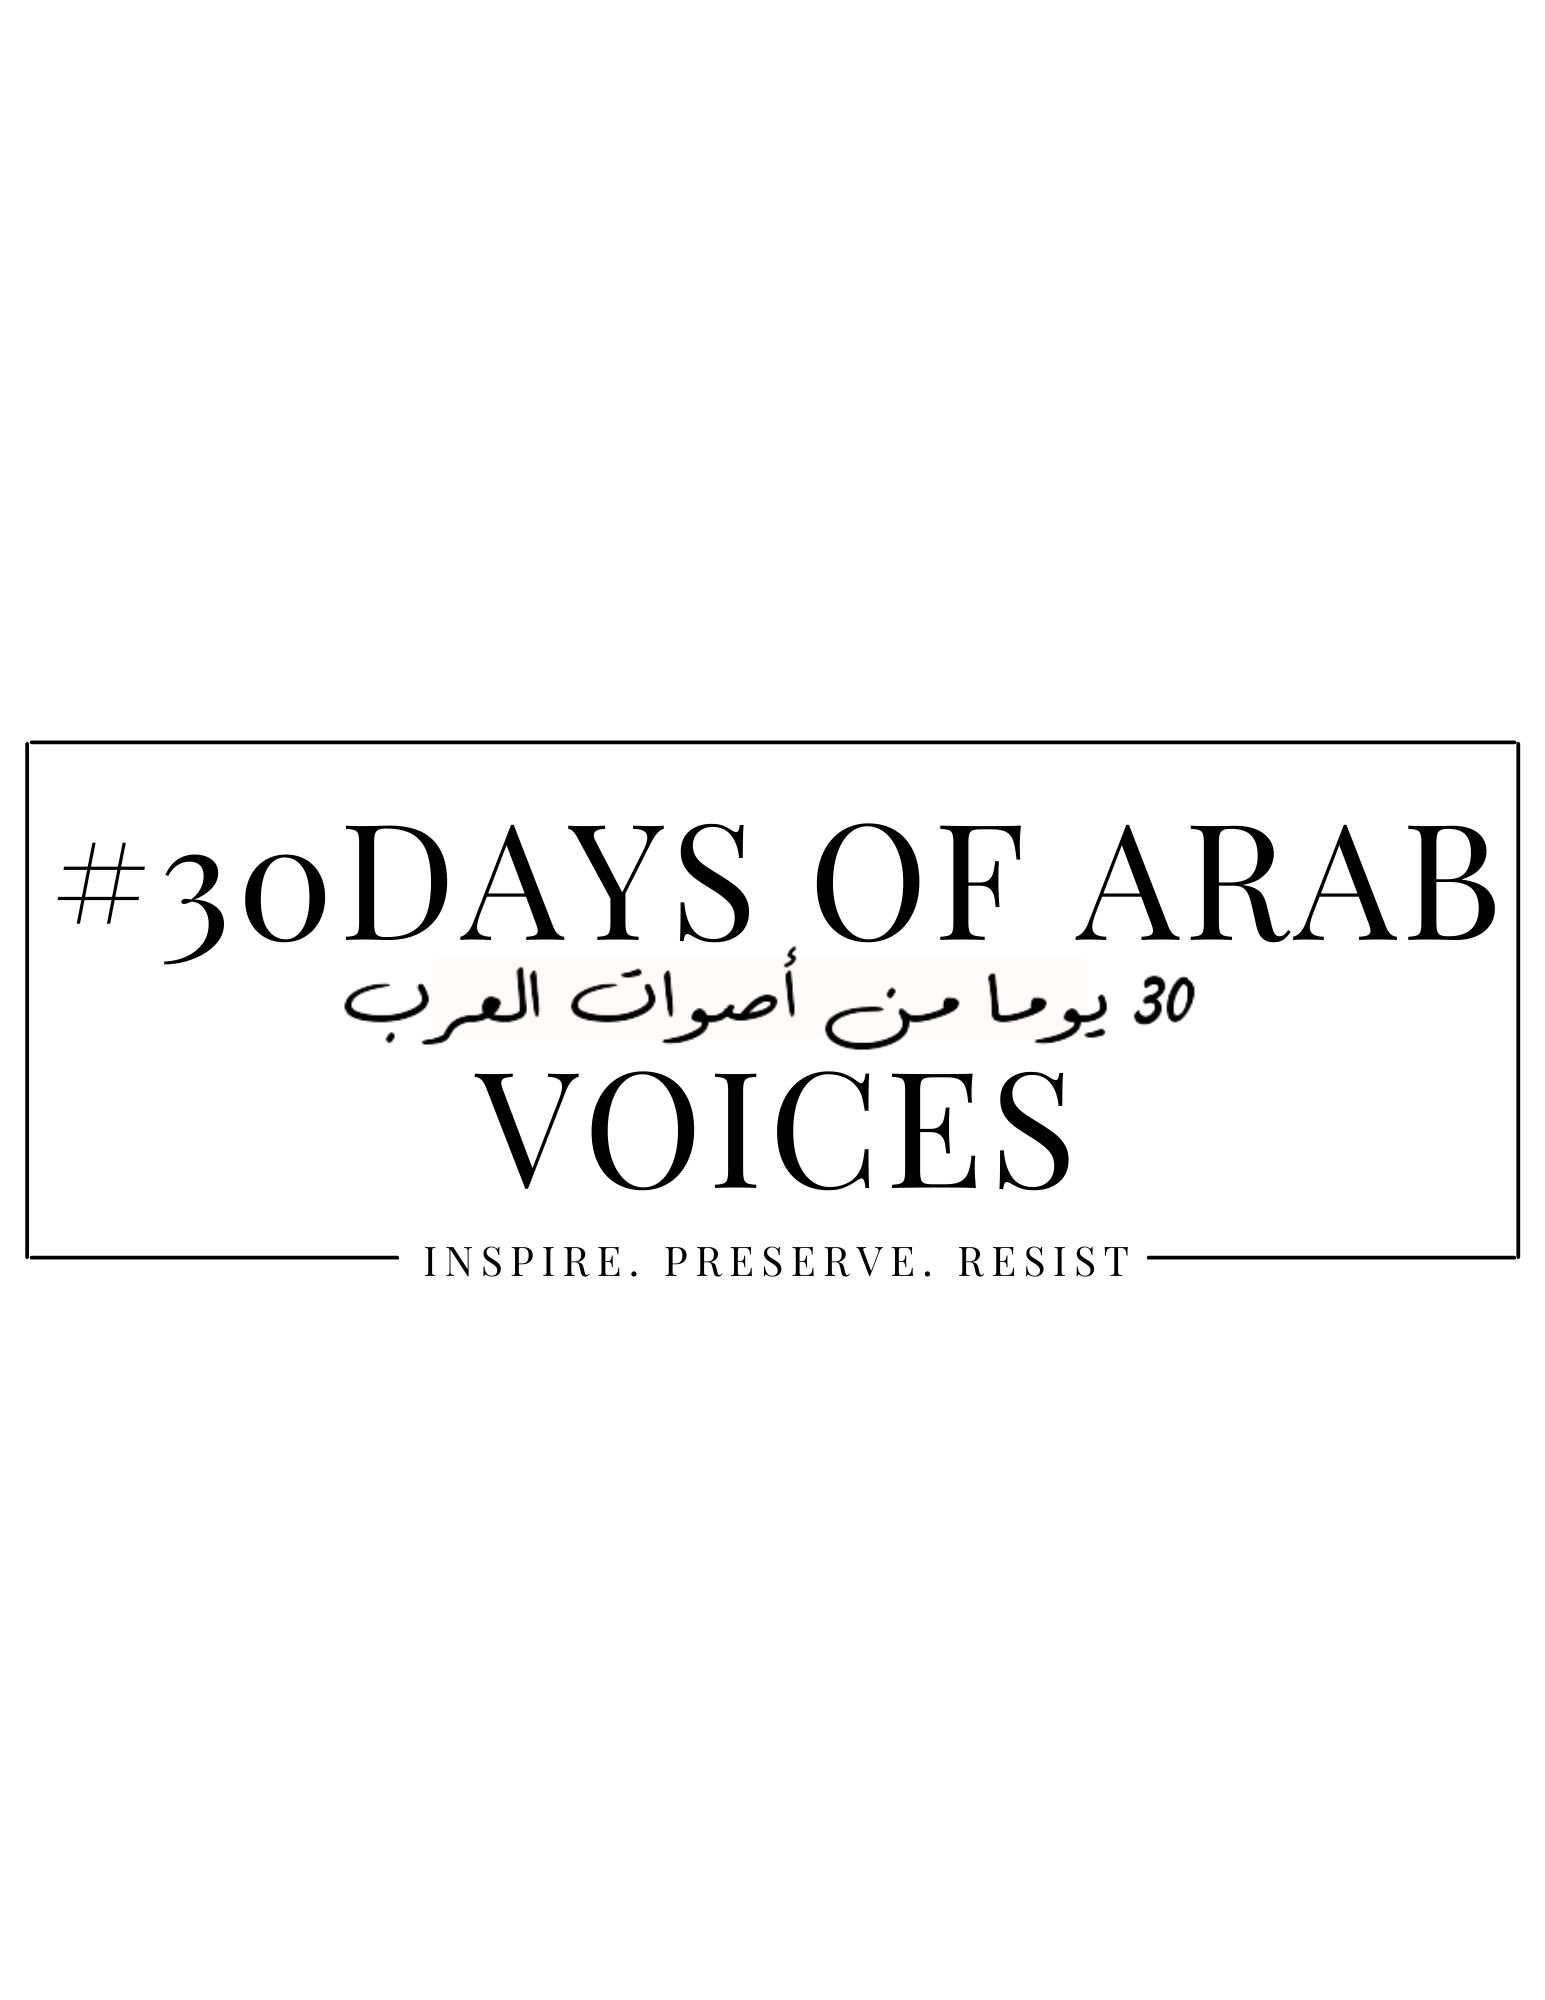 30 Days of Arab Voices Banner